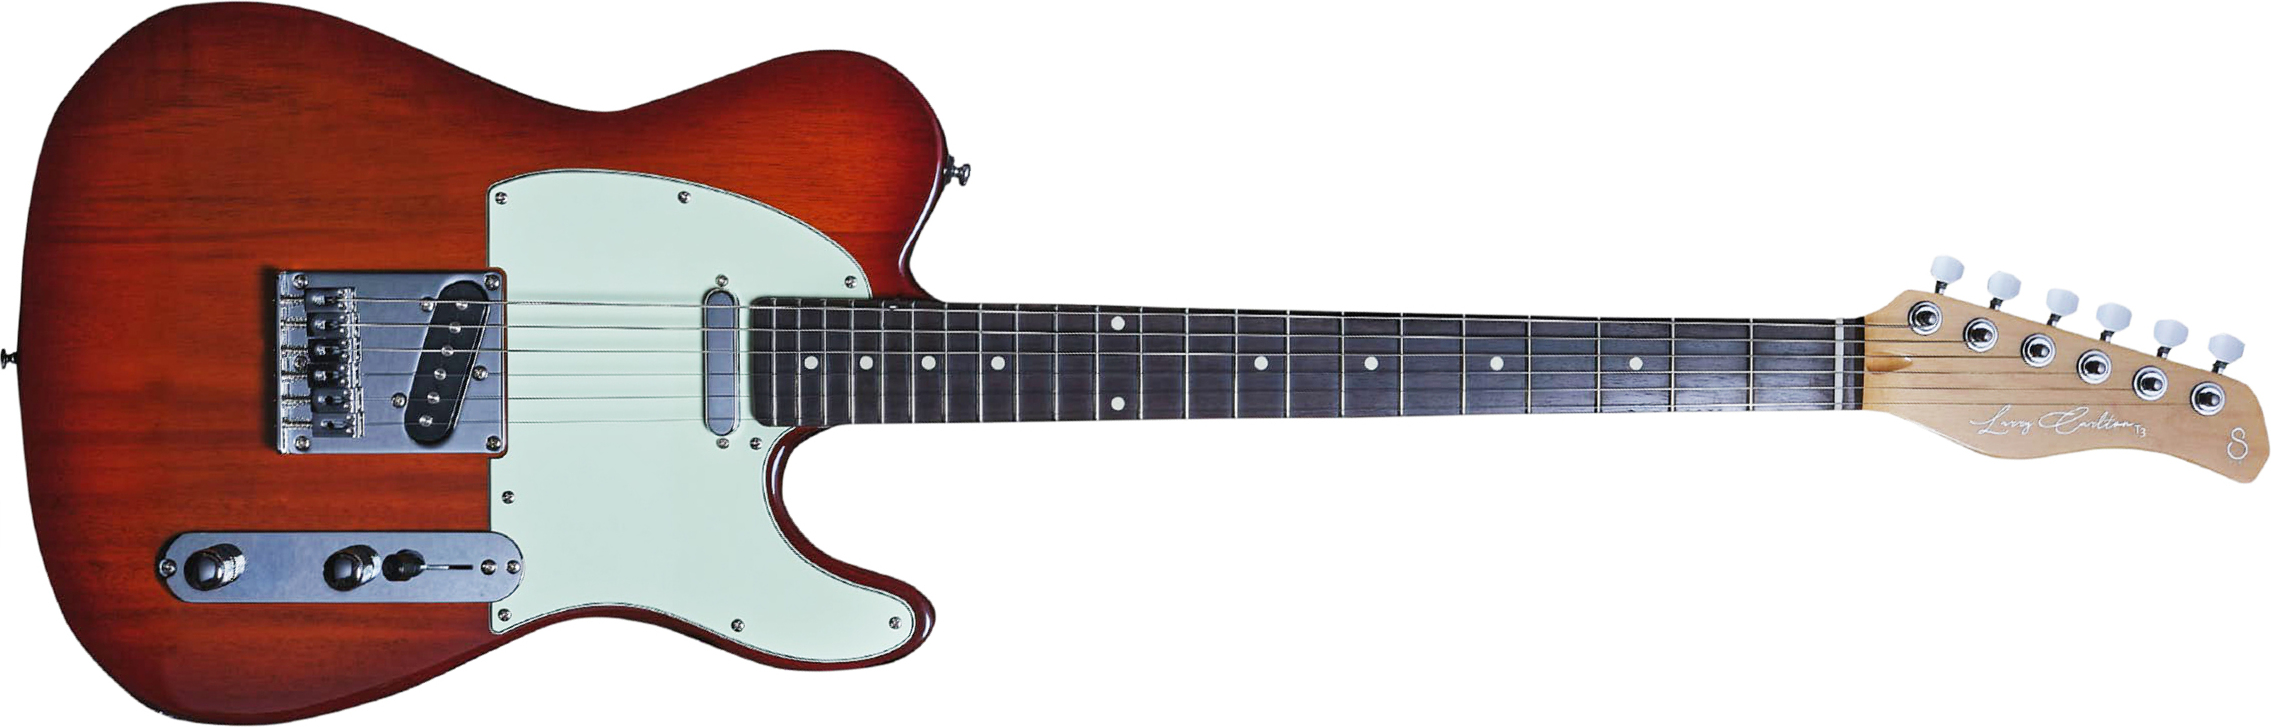 Sire Larry Carlton T3 Signature 2s Ht Rw - Tobacco Sunburst - Televorm elektrische gitaar - Main picture